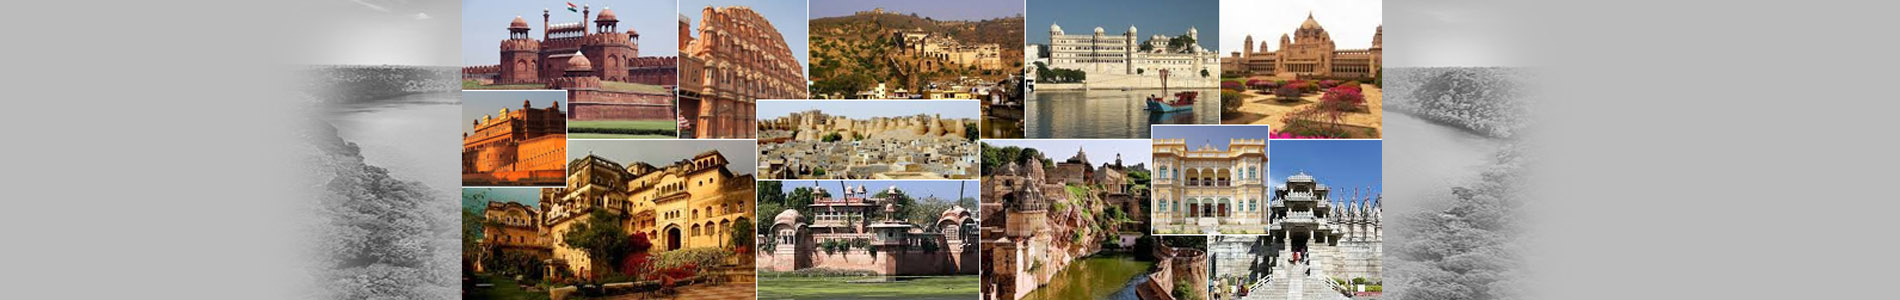 Rajasthan Travel Destinations